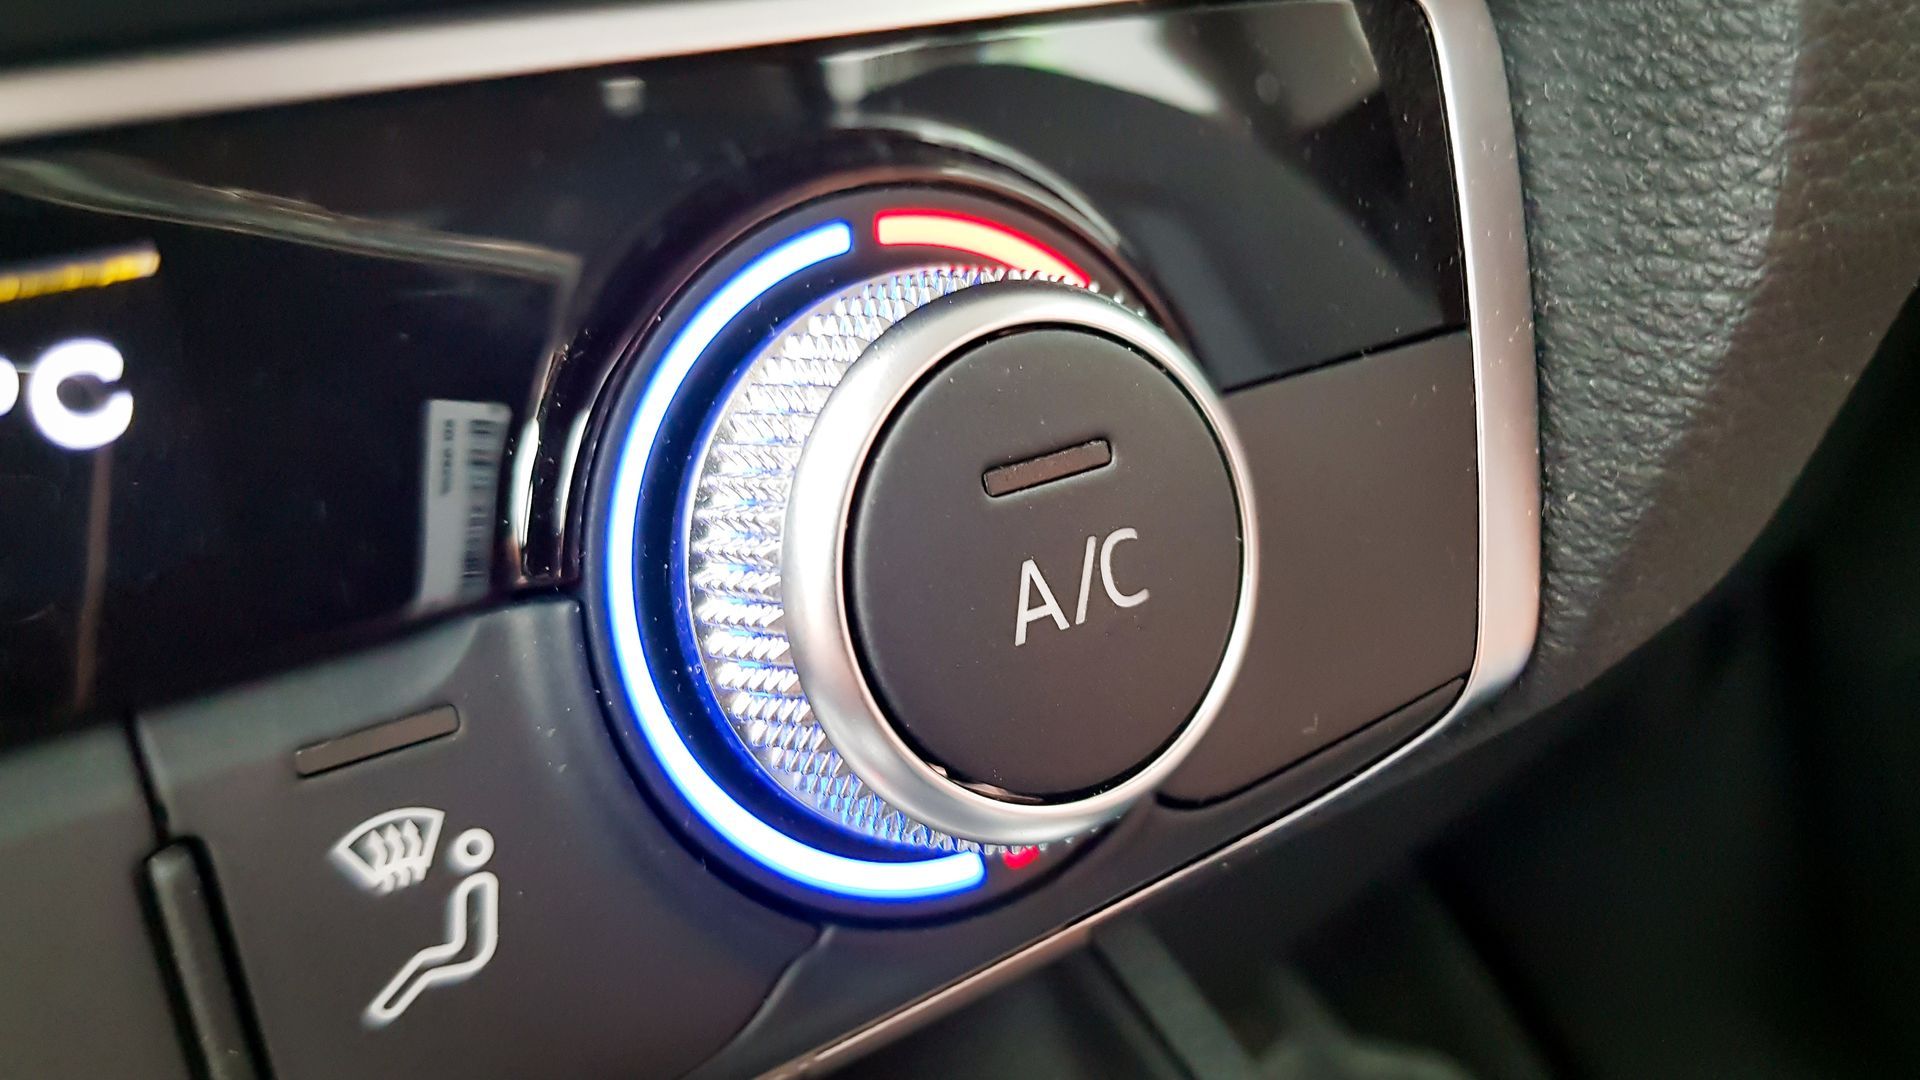 A close-up of a car's a/c button.